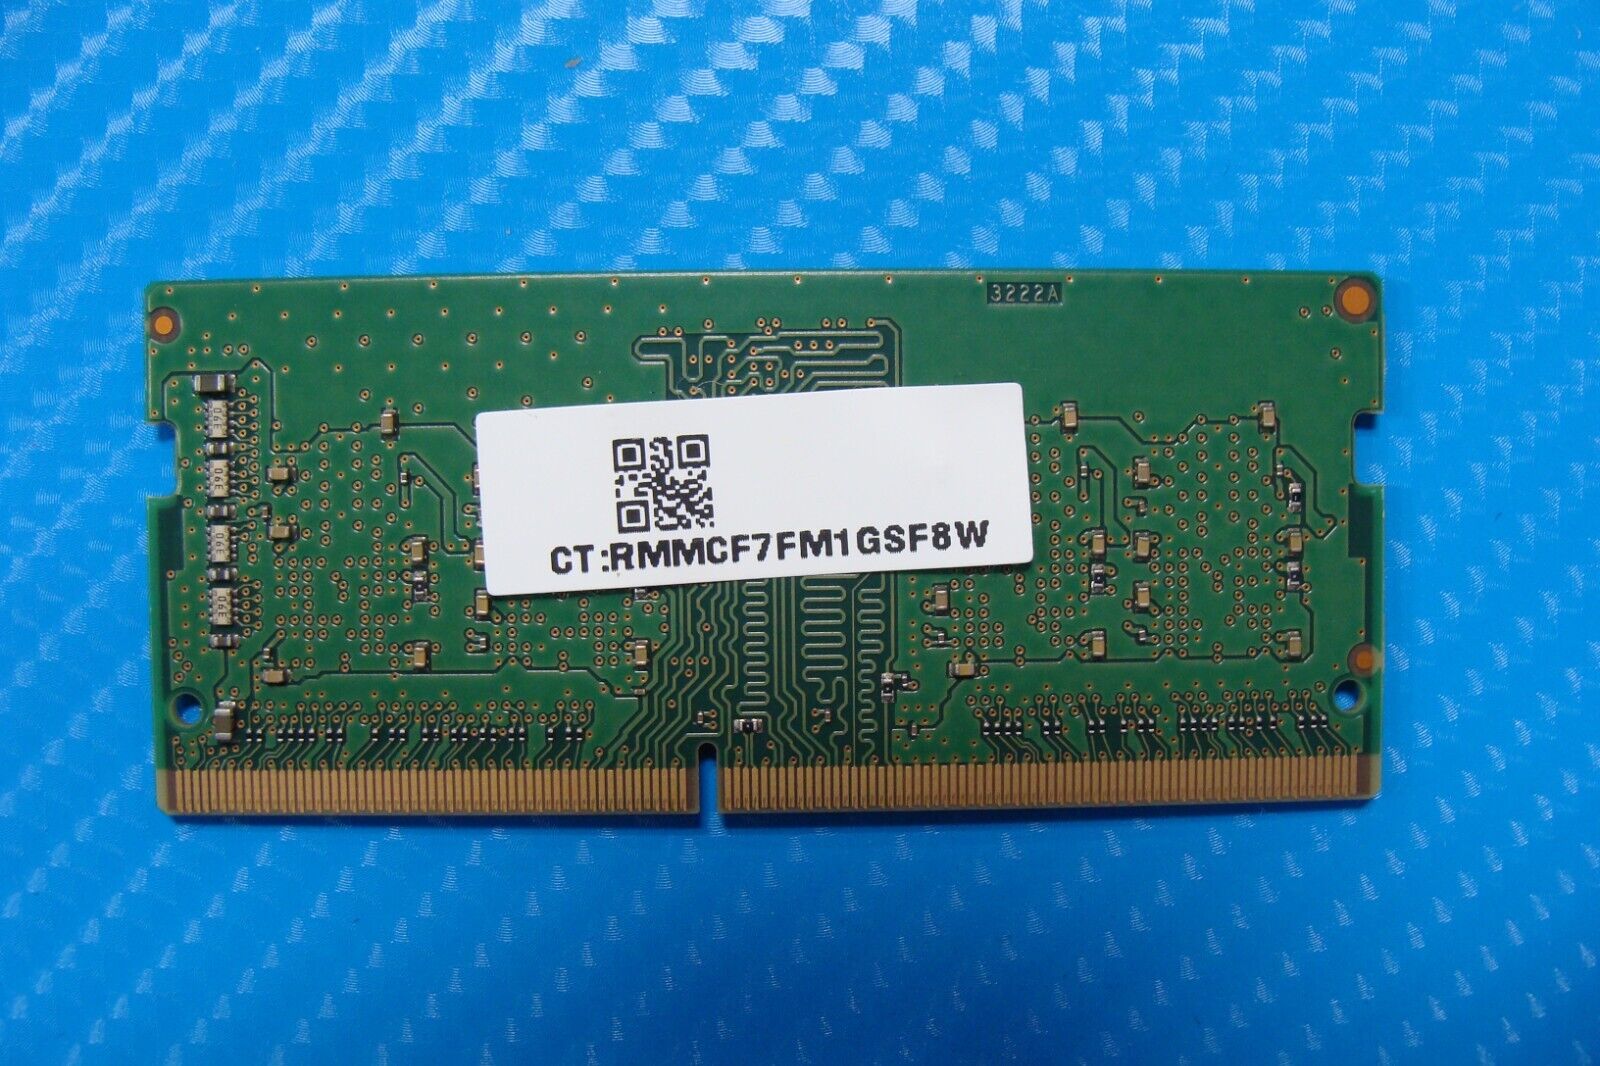 HP 15-dy2791wm Samsung 4GB PC4-3200AA Memory RAM SO-DIMM MTA4ATF51264HZ-3G2R1